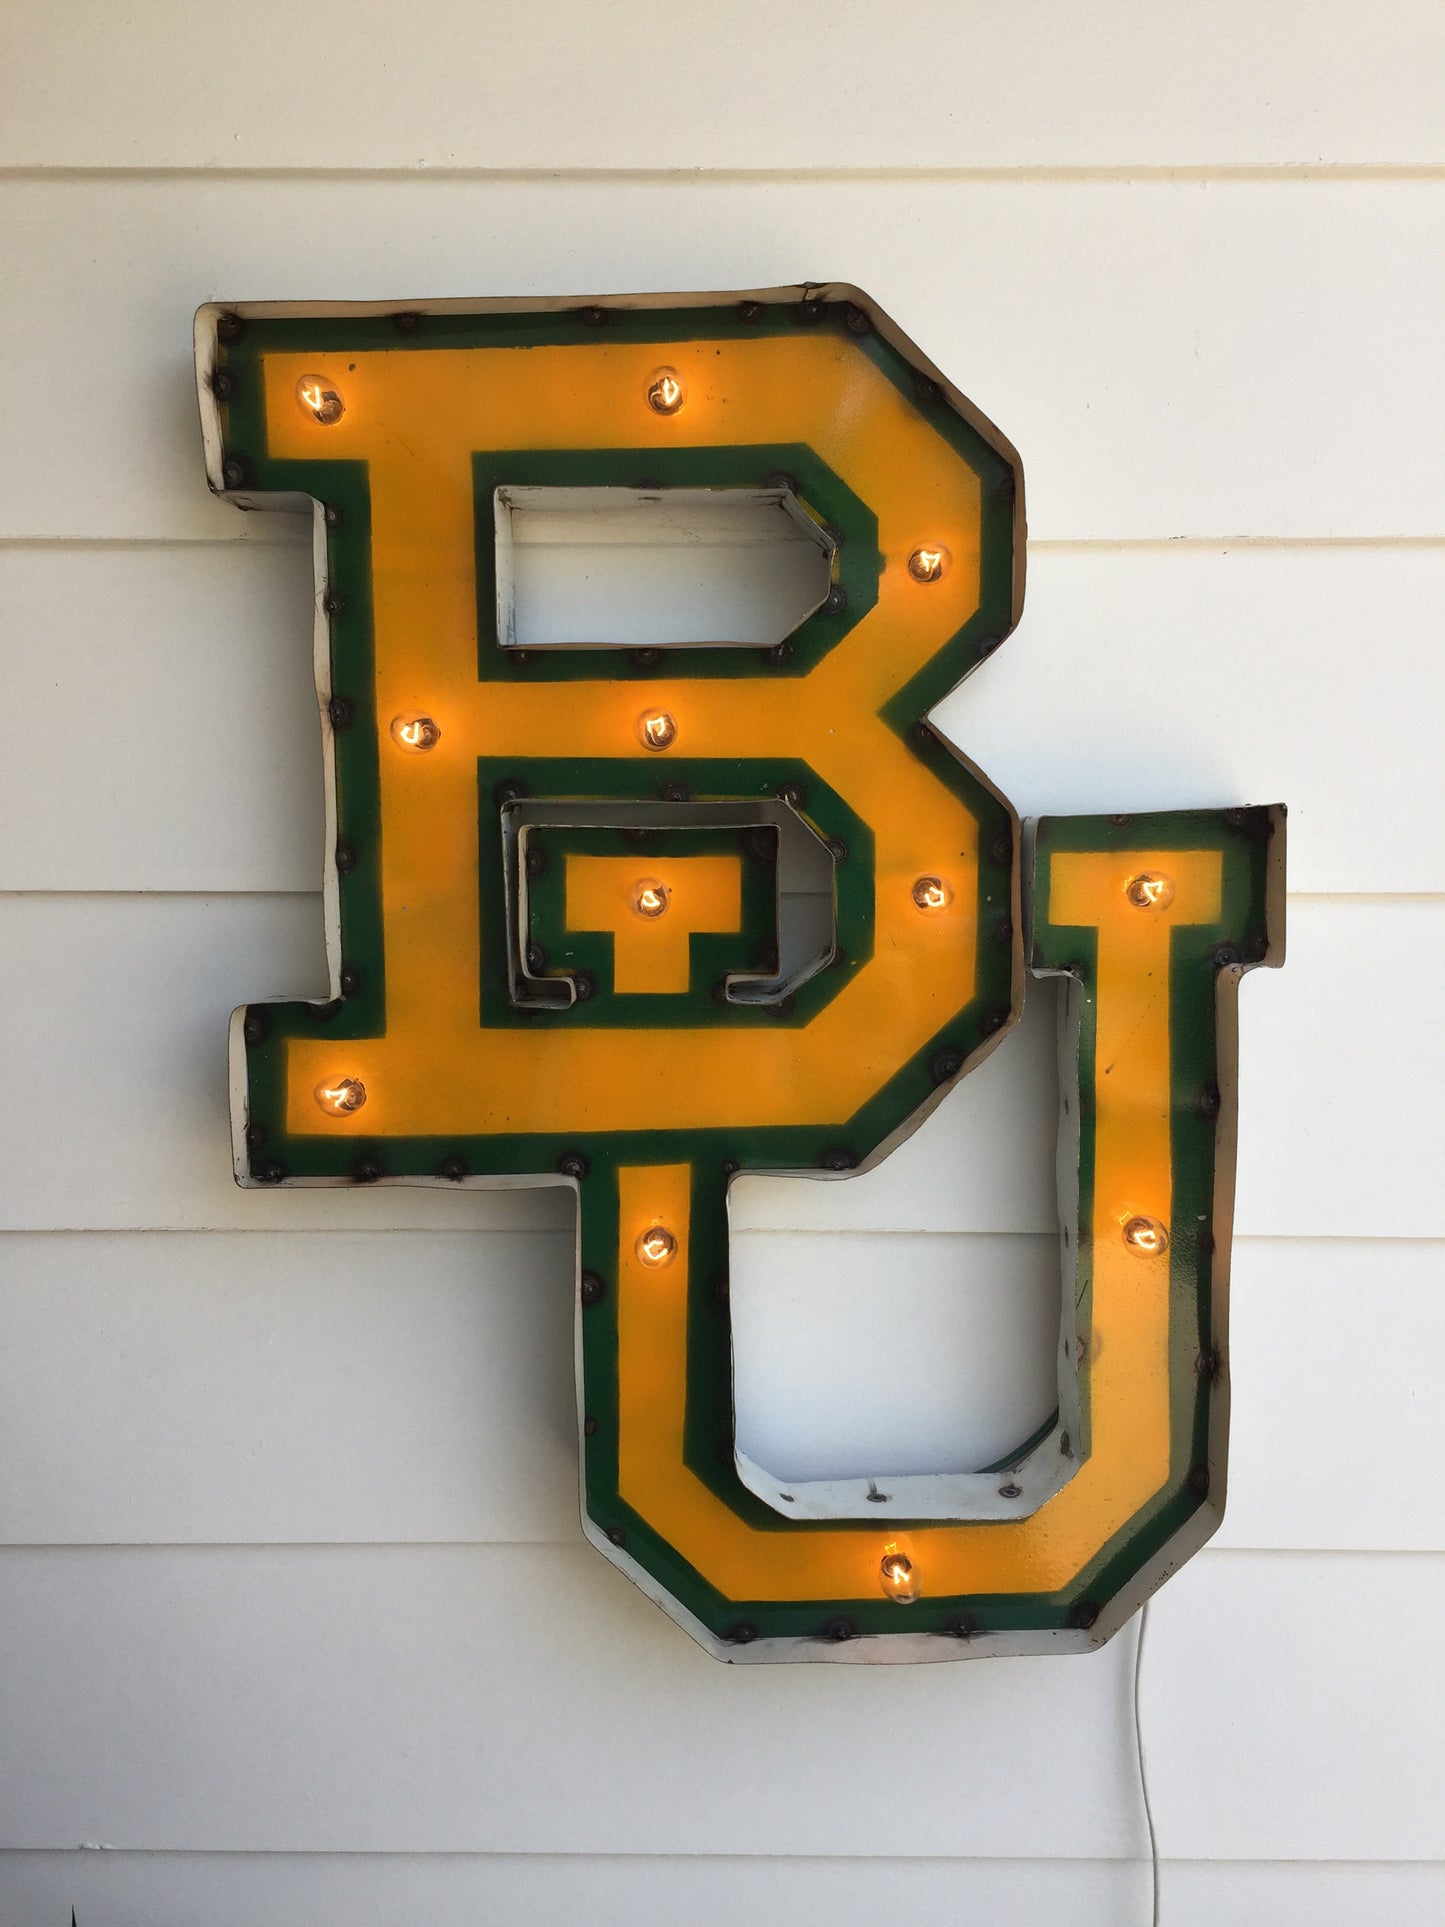 Baylor University "BU" Lighted Recycled Metal Wall Decor